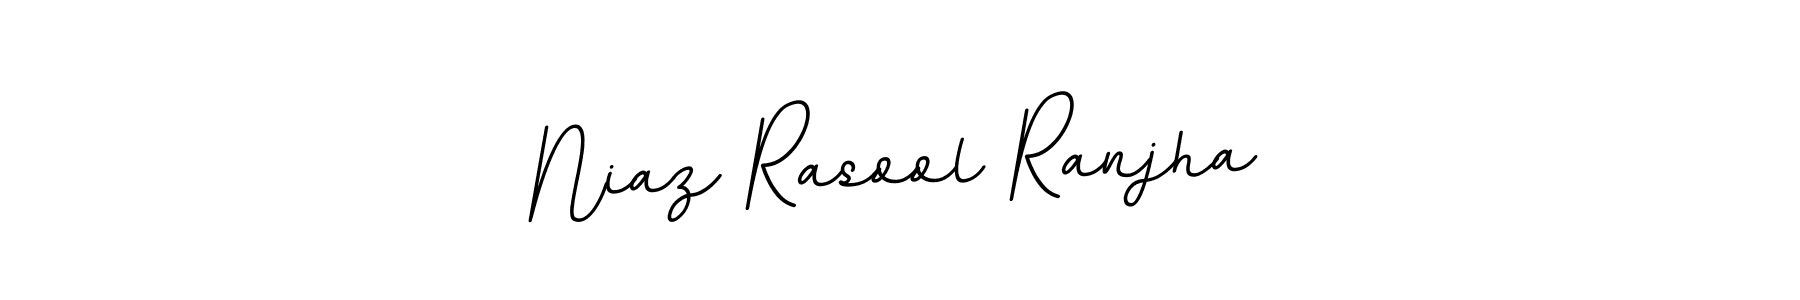 How to Draw Niaz Rasool Ranjha signature style? BallpointsItalic-DORy9 is a latest design signature styles for name Niaz Rasool Ranjha. Niaz Rasool Ranjha signature style 11 images and pictures png